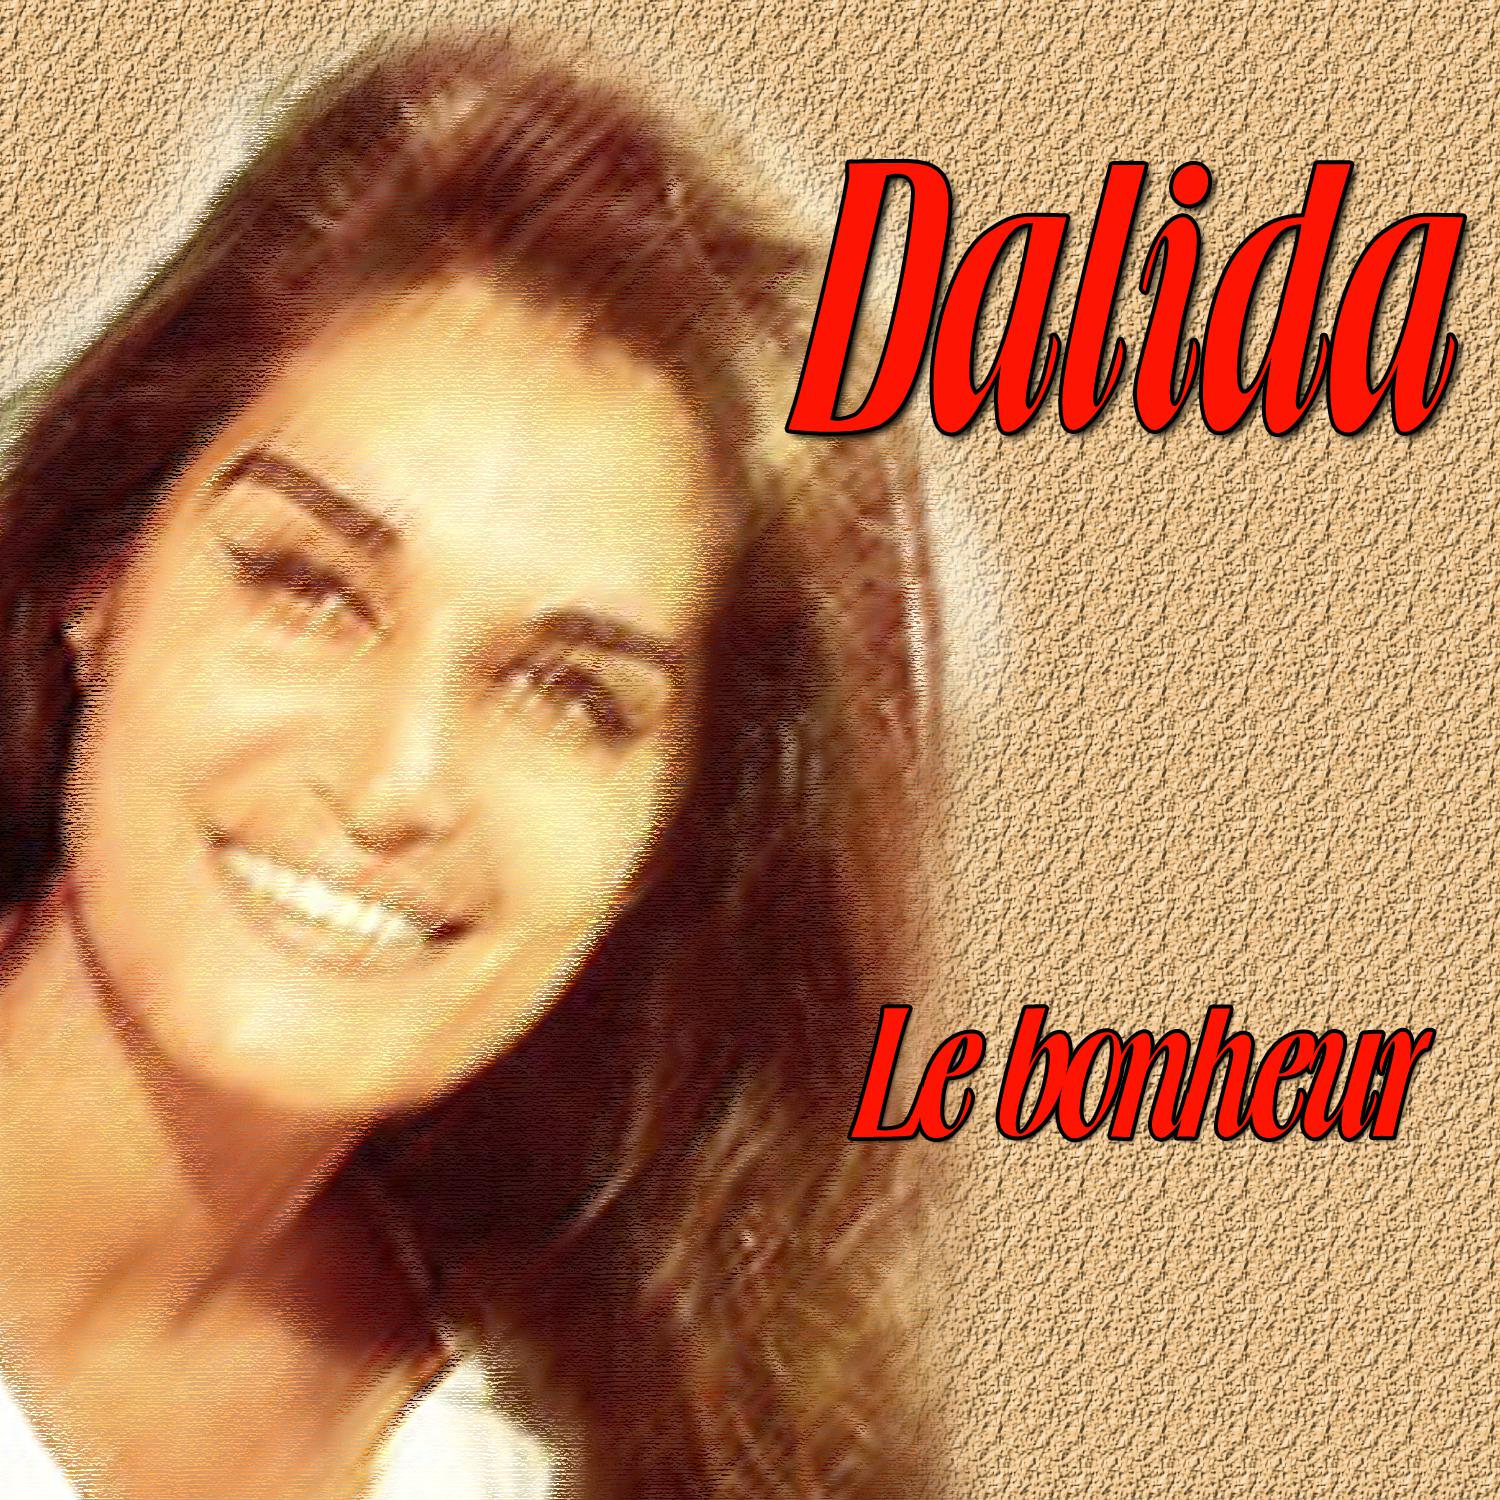 Dalida - Le bonheur. 播 放 收 藏 分 享 下 载. Dalida. 歌 手. 评 论. 生 成 外 链 播 放 器. 所 属 ...